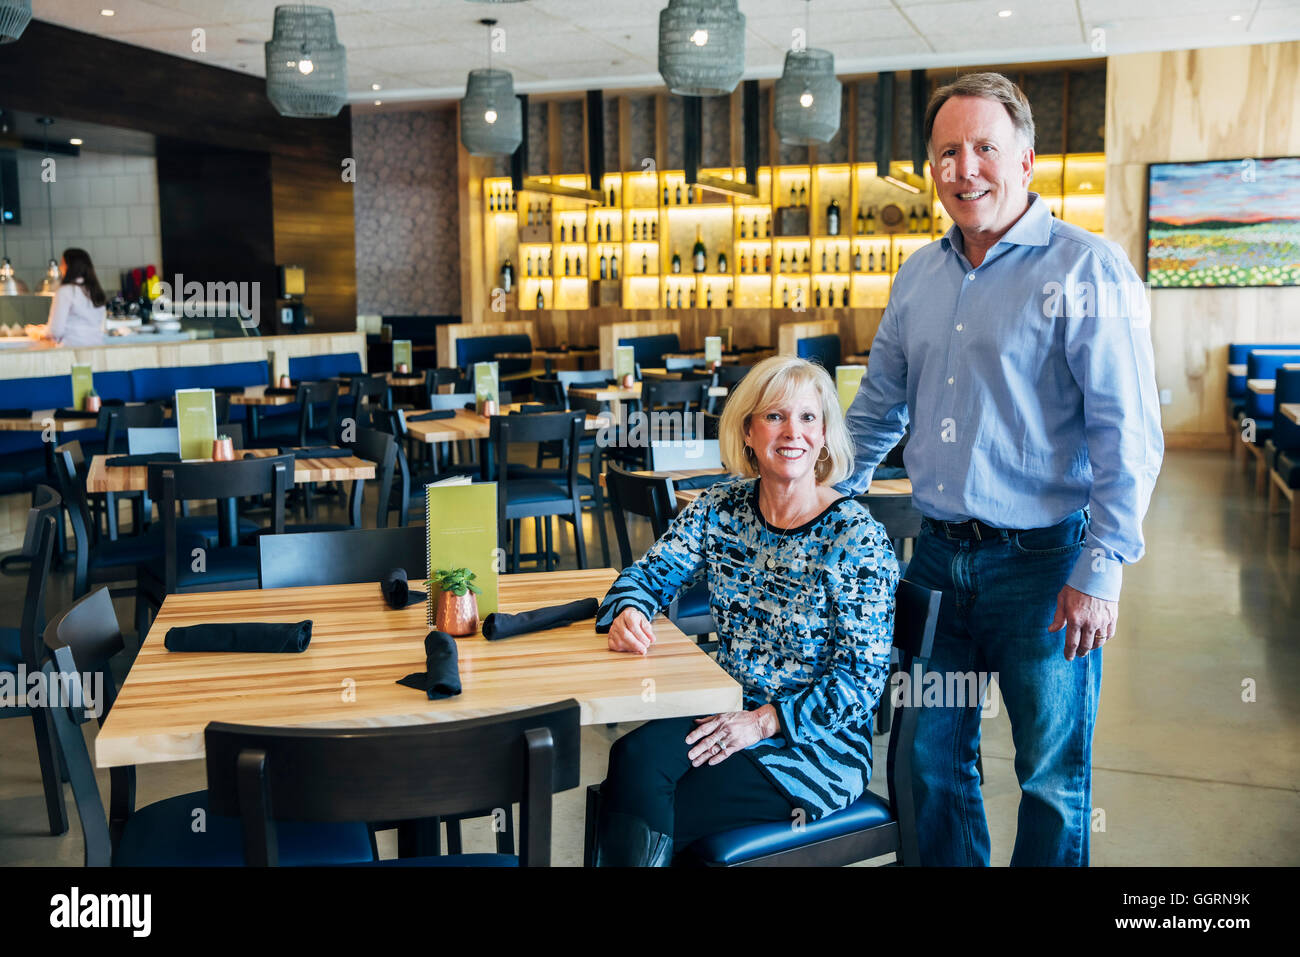 Caucasian couple posing in restaurant Banque D'Images